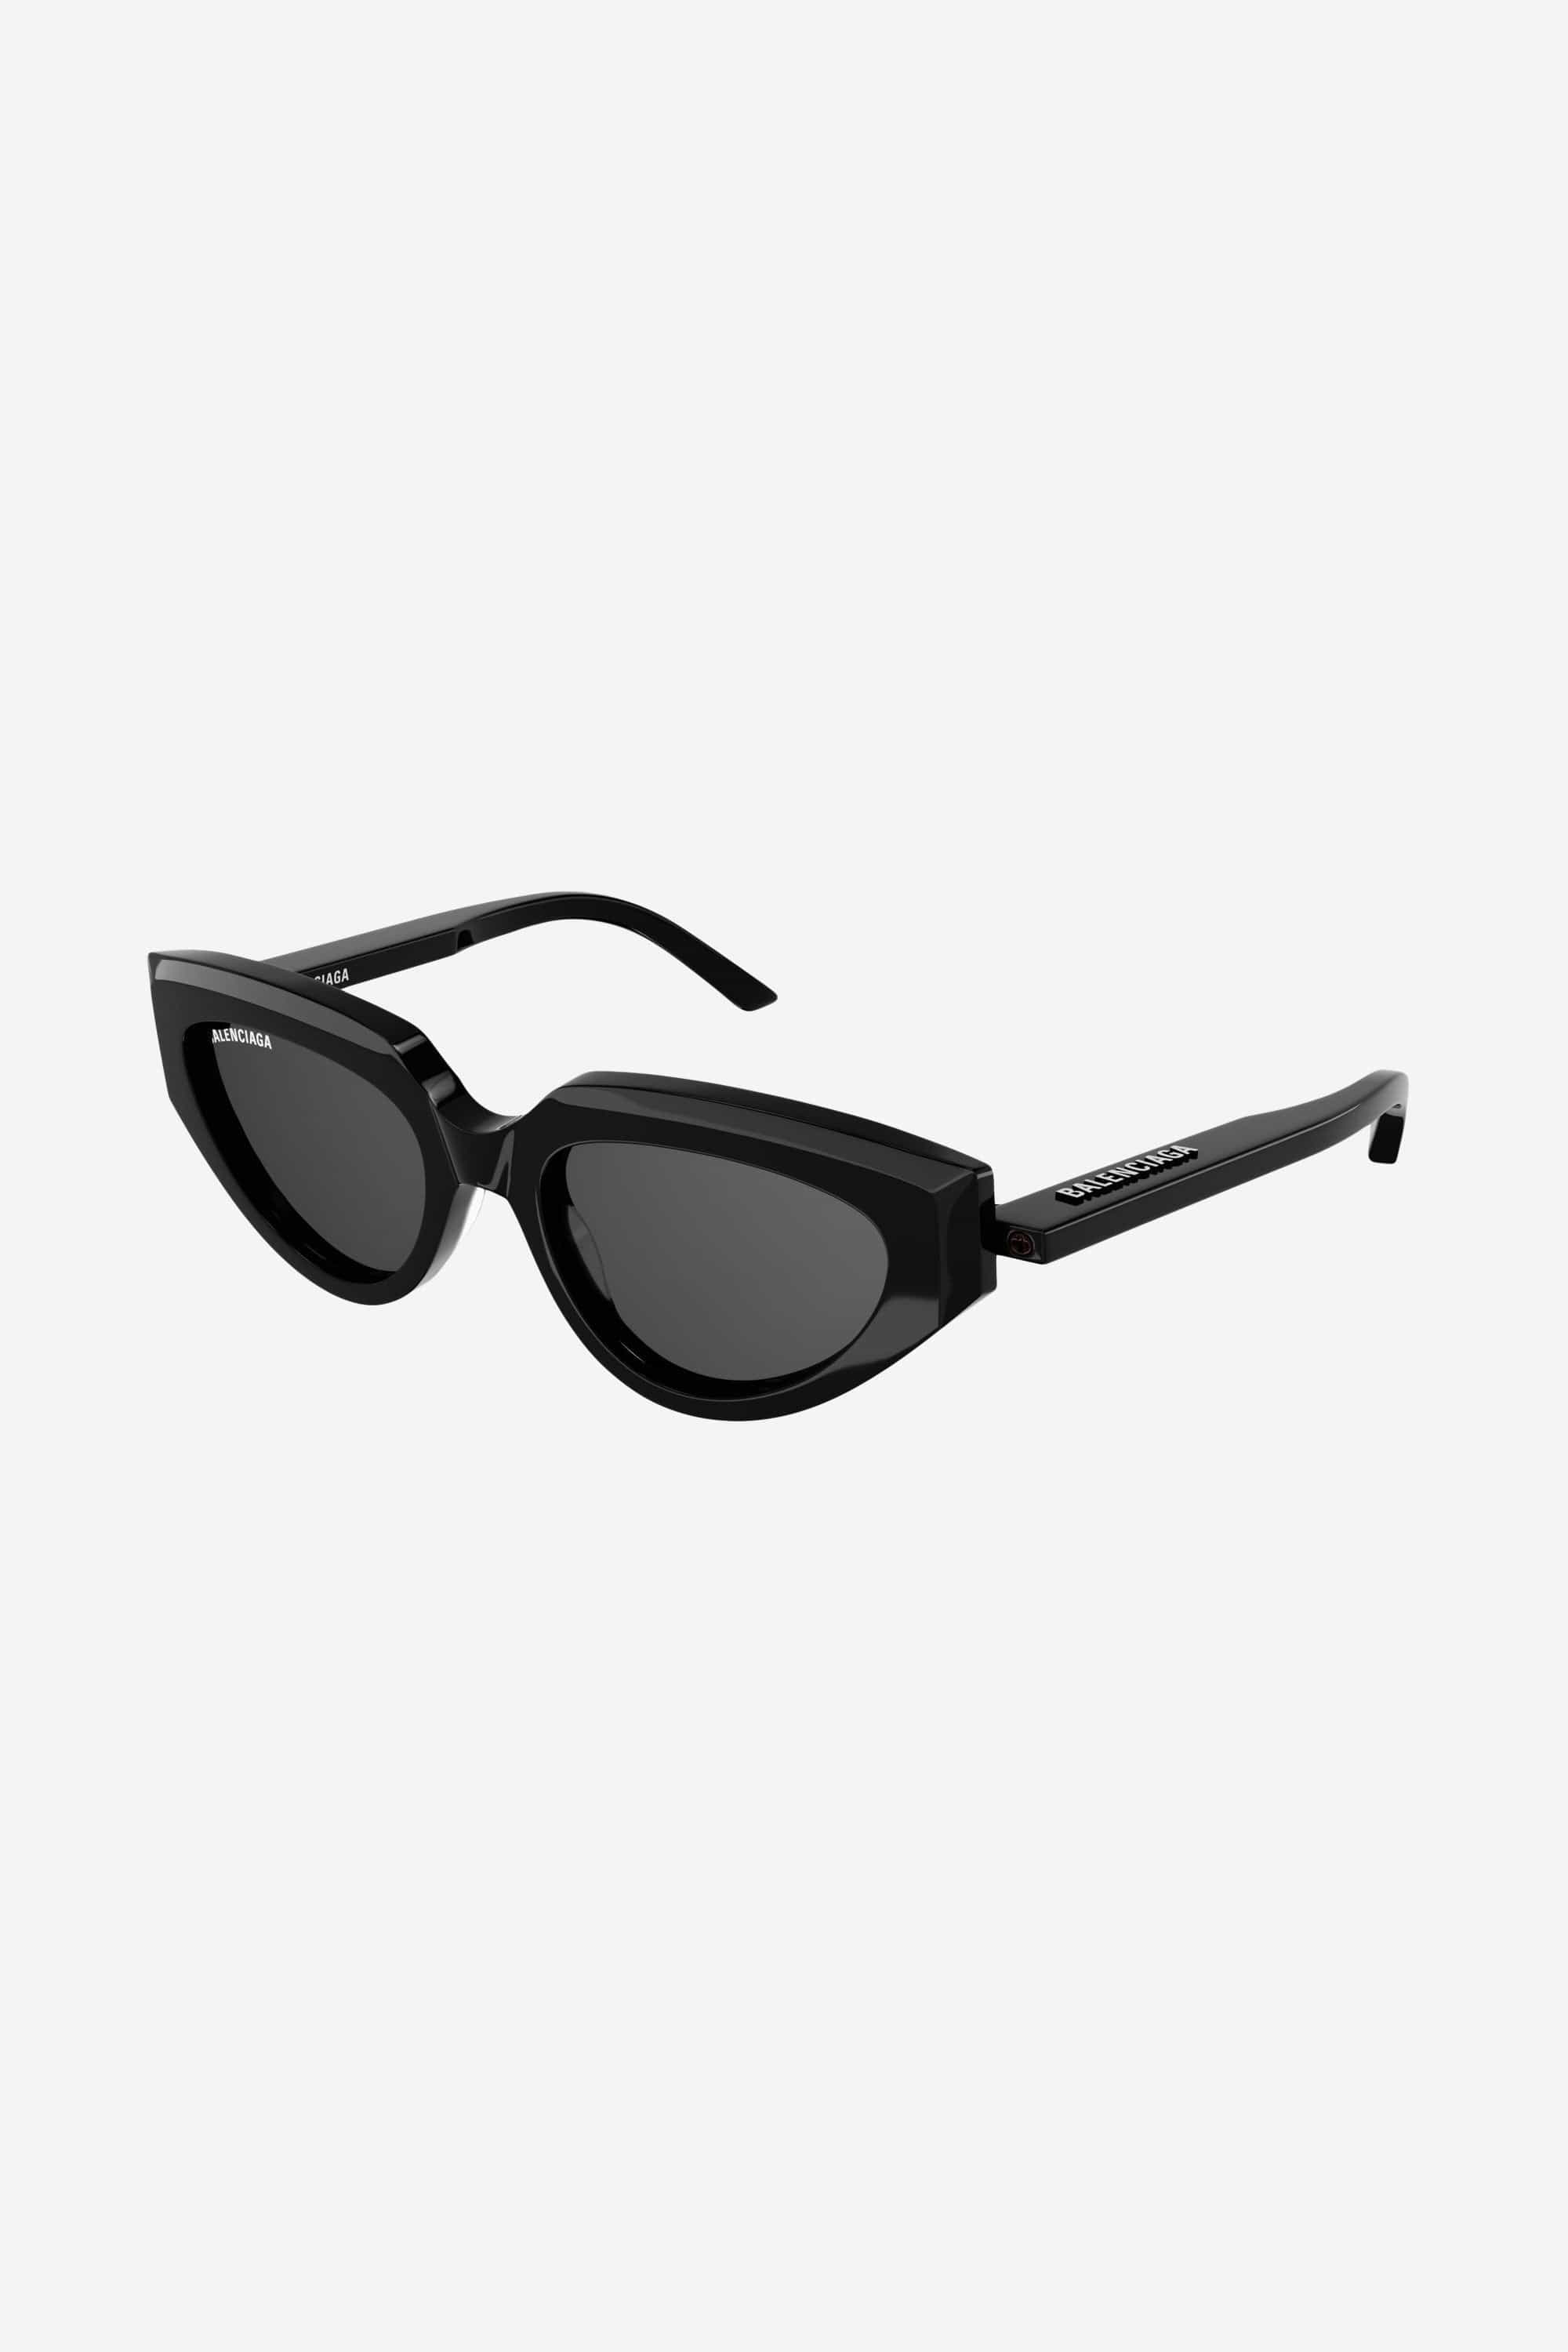 Balenciaga black cat eye sunglasses with white logo - Eyewear Club